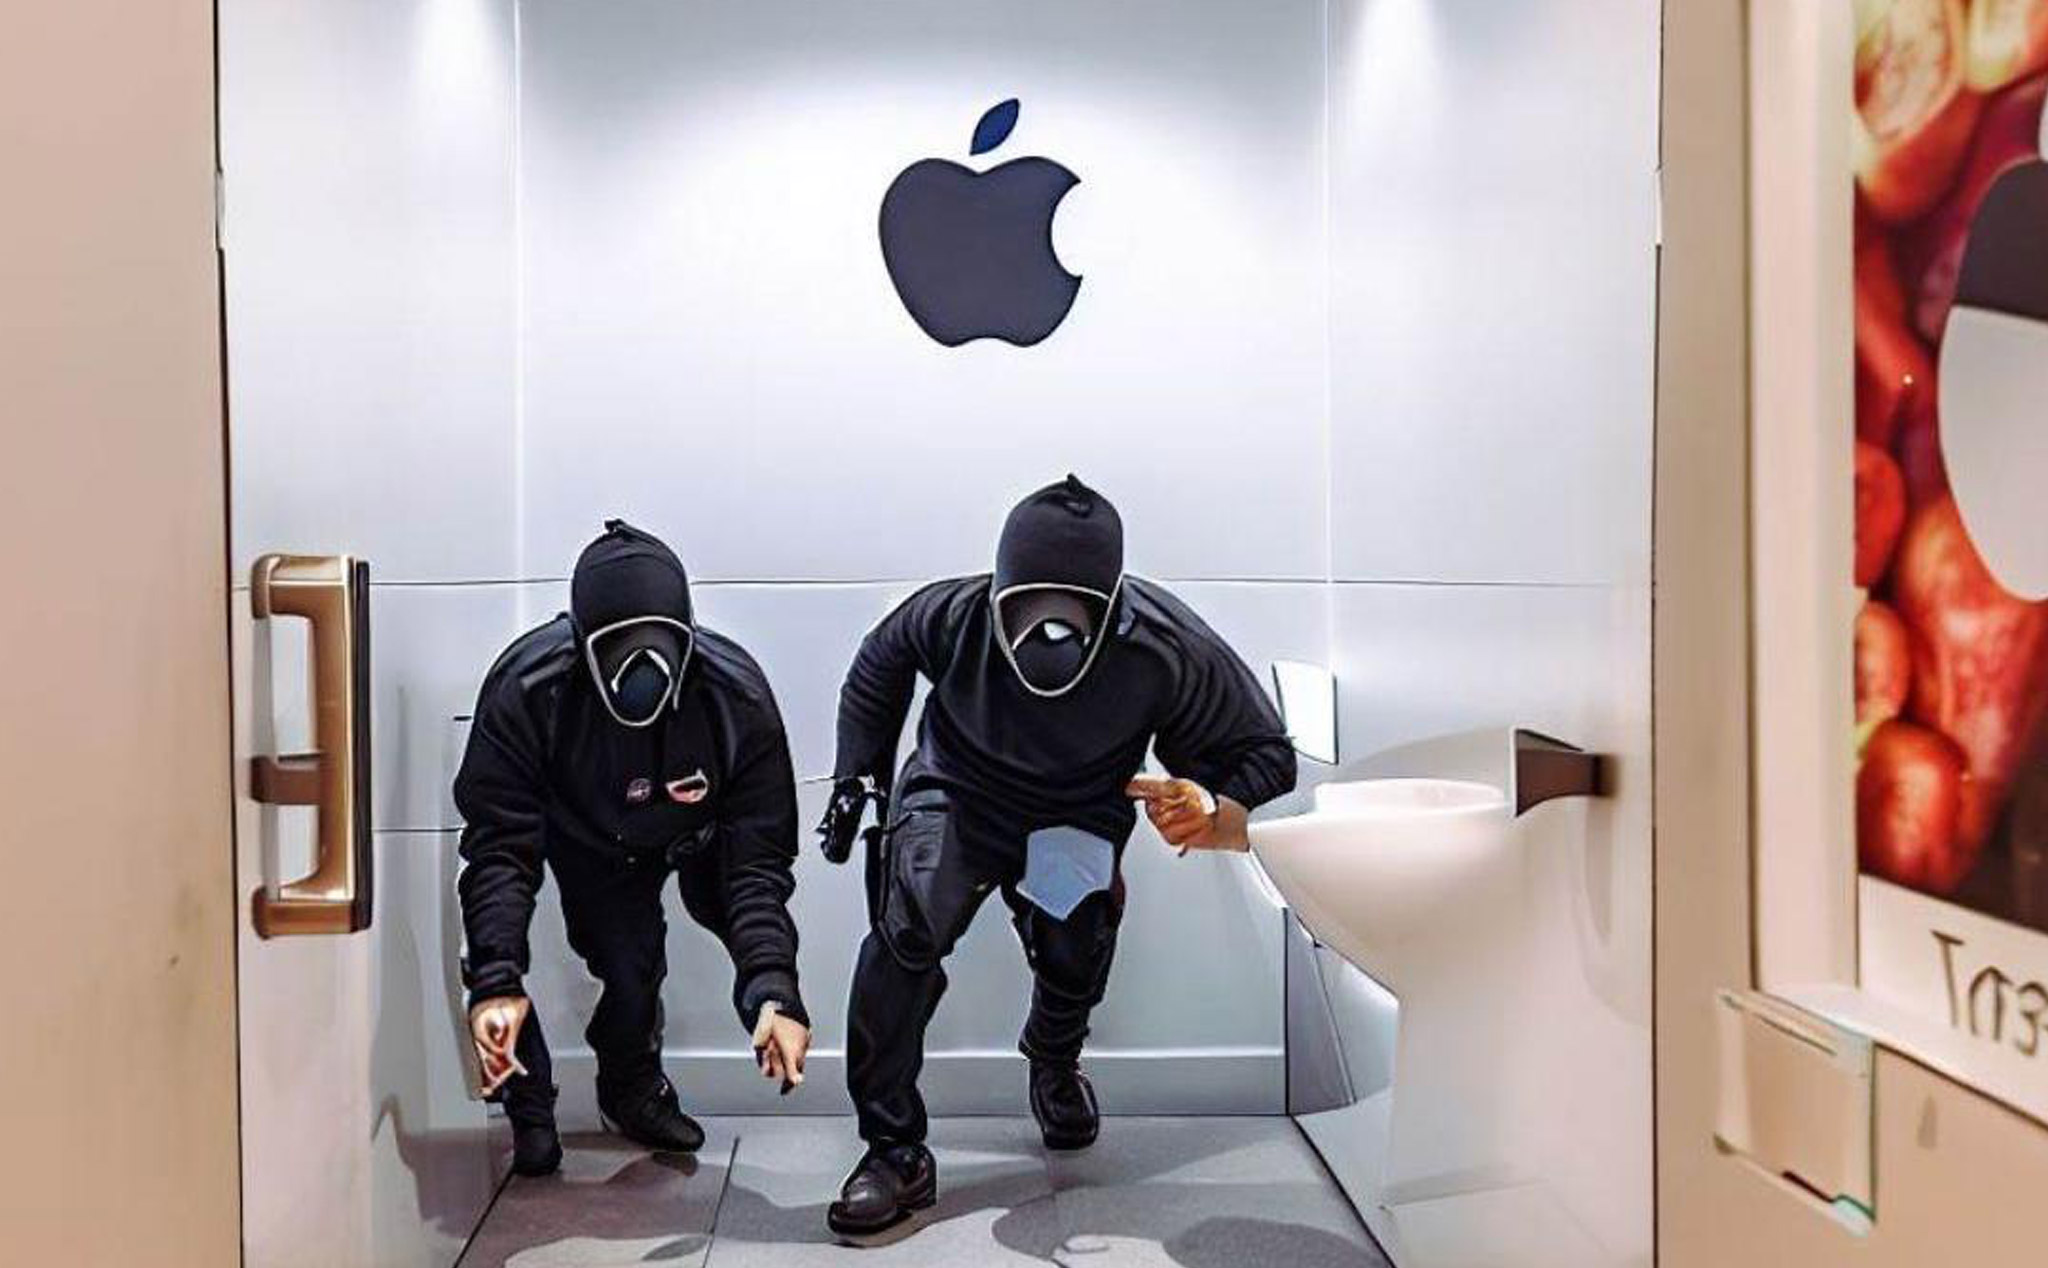 6 famous million-dollar Apple product theft cases